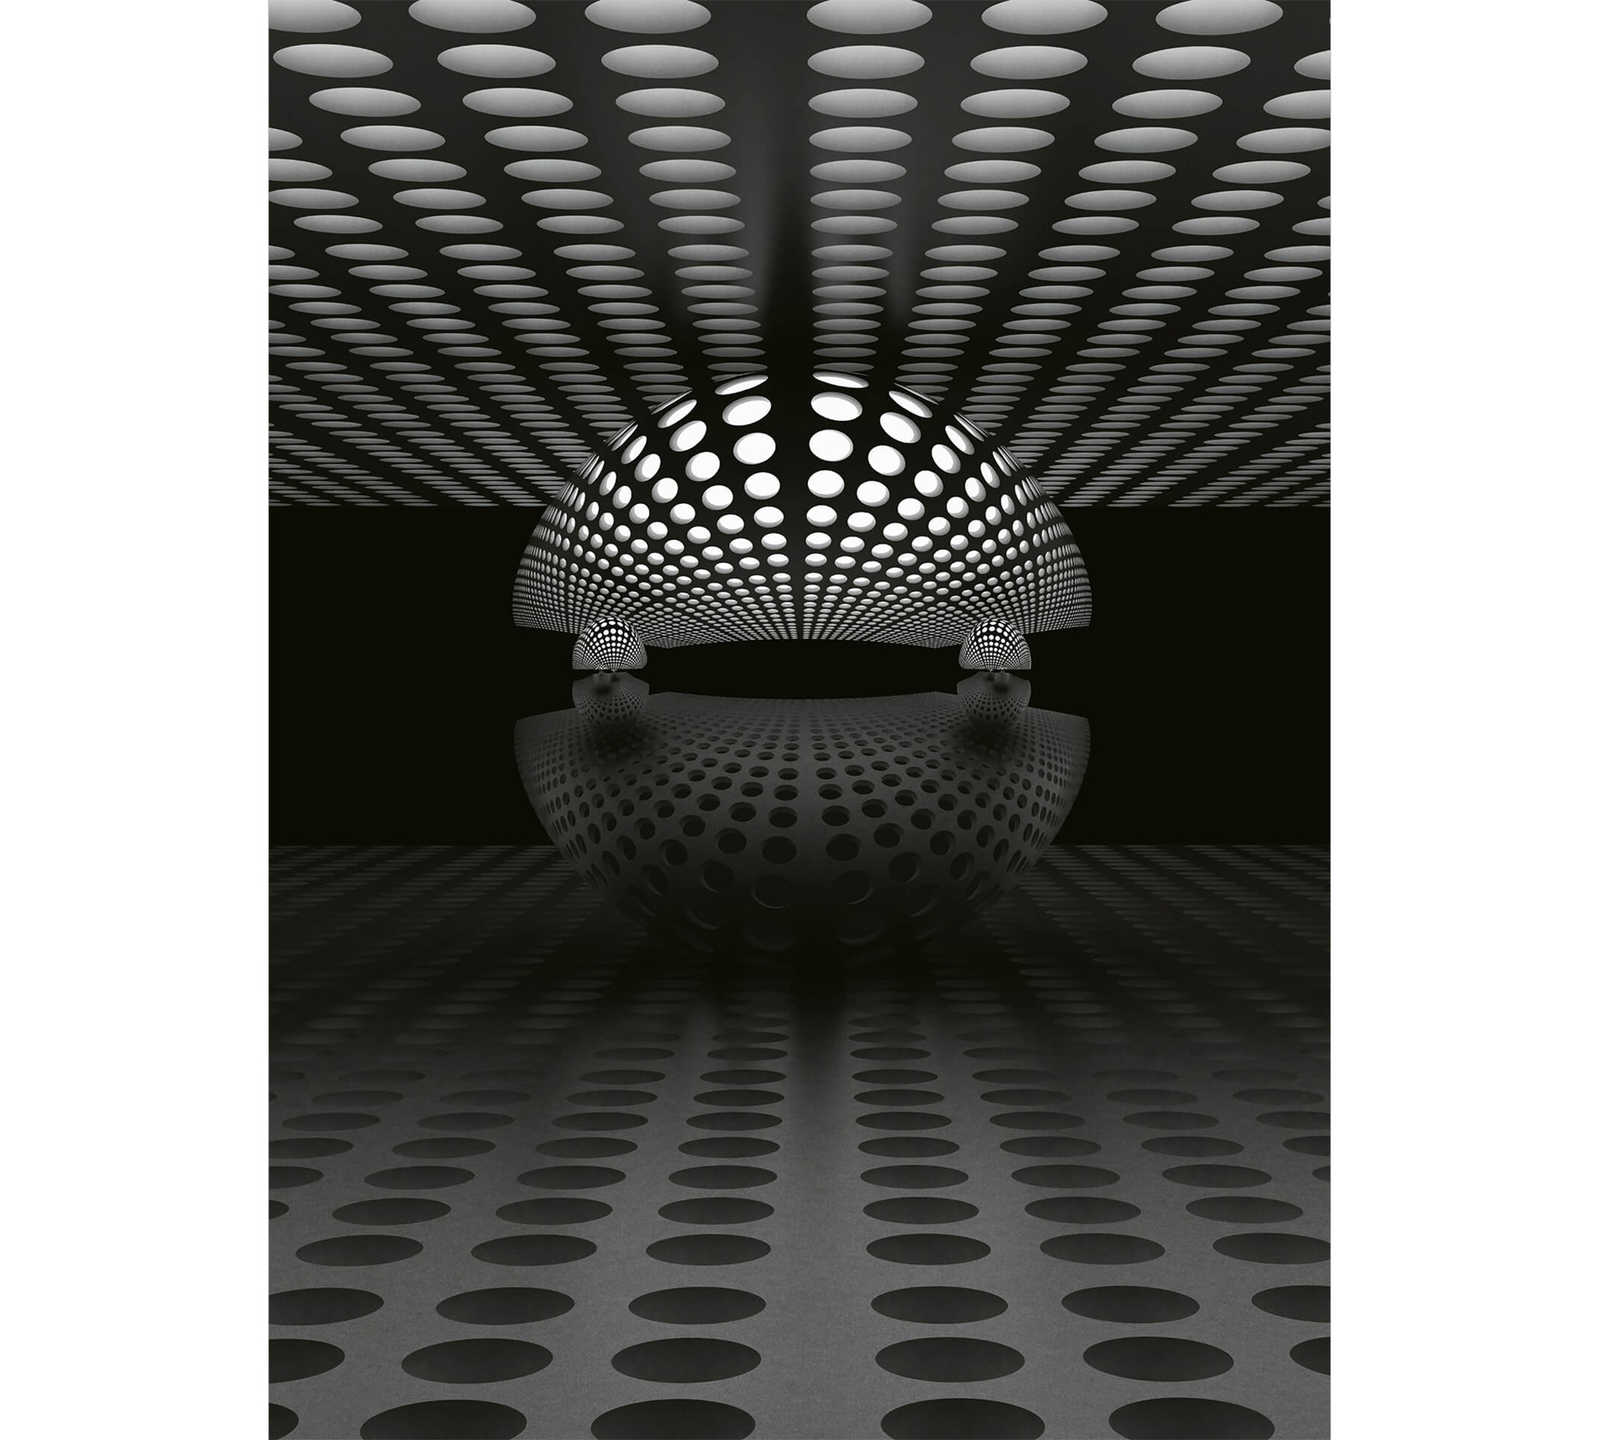 Fototapete abstrakt 3D Kugel – Schwarz, Grau, Weiß
